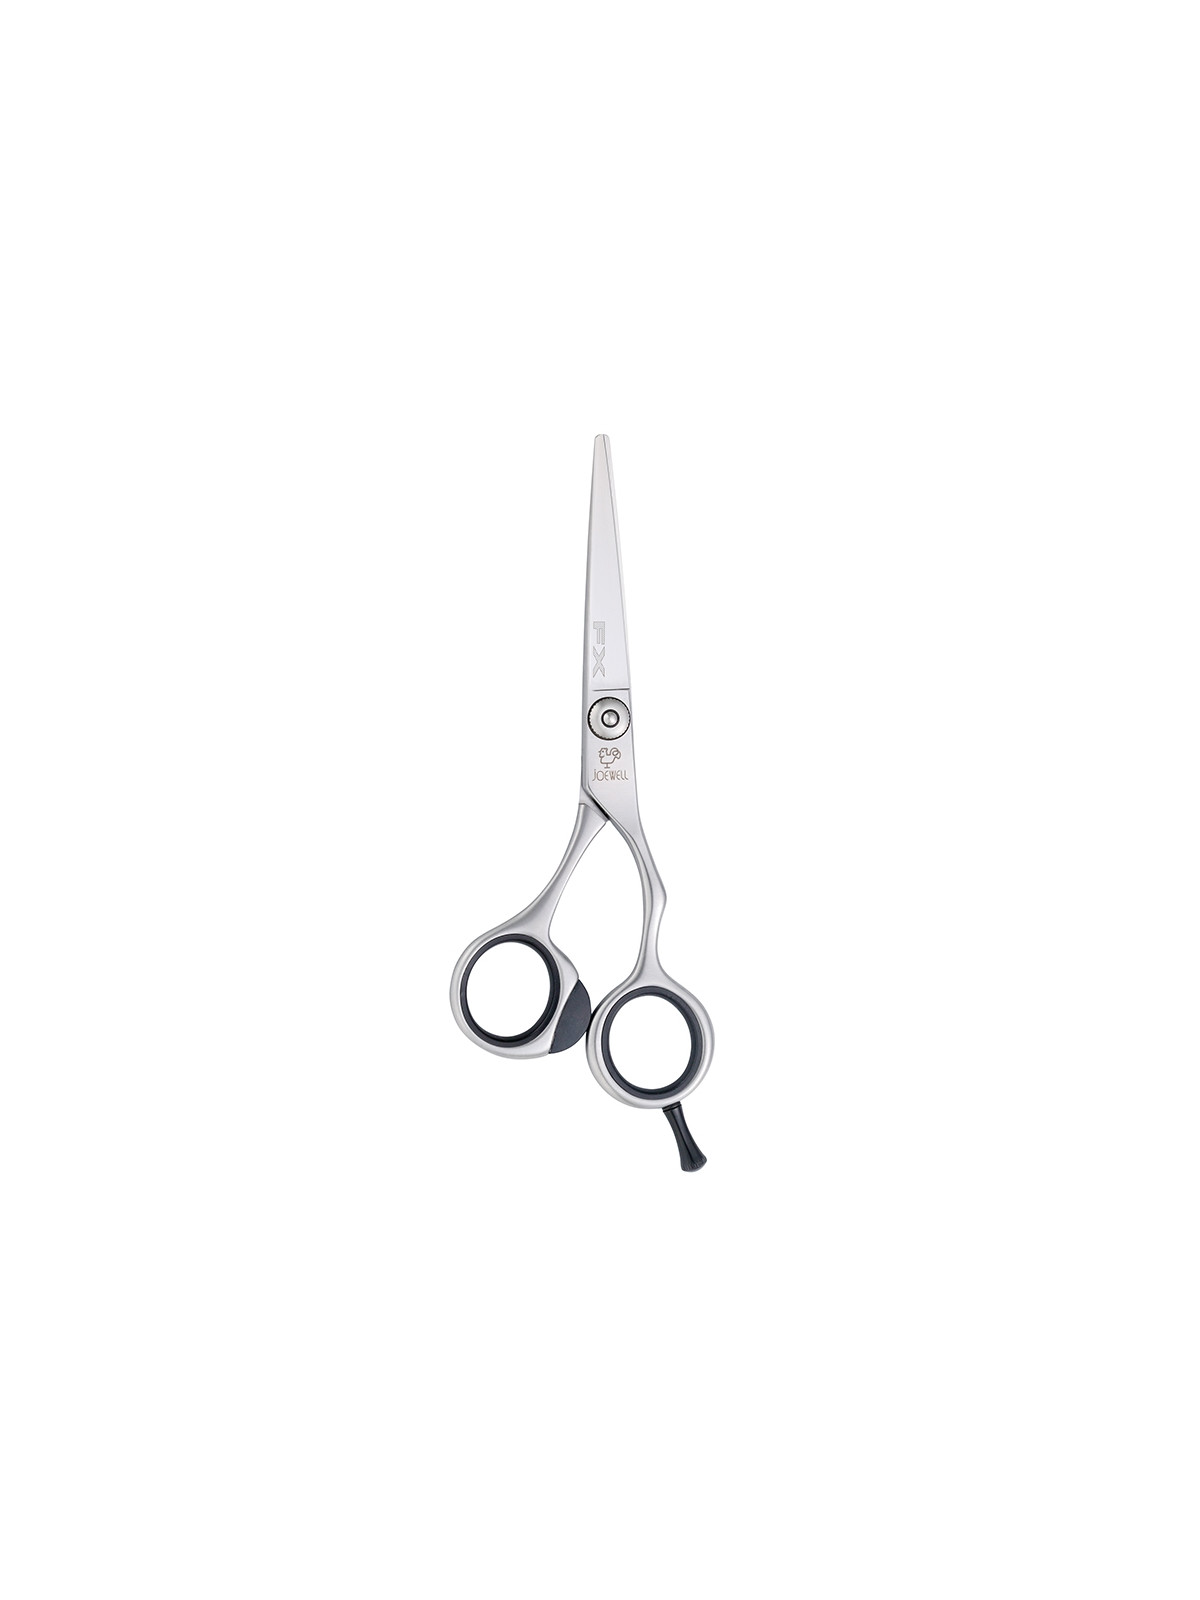 Joewell FX cutting scissors